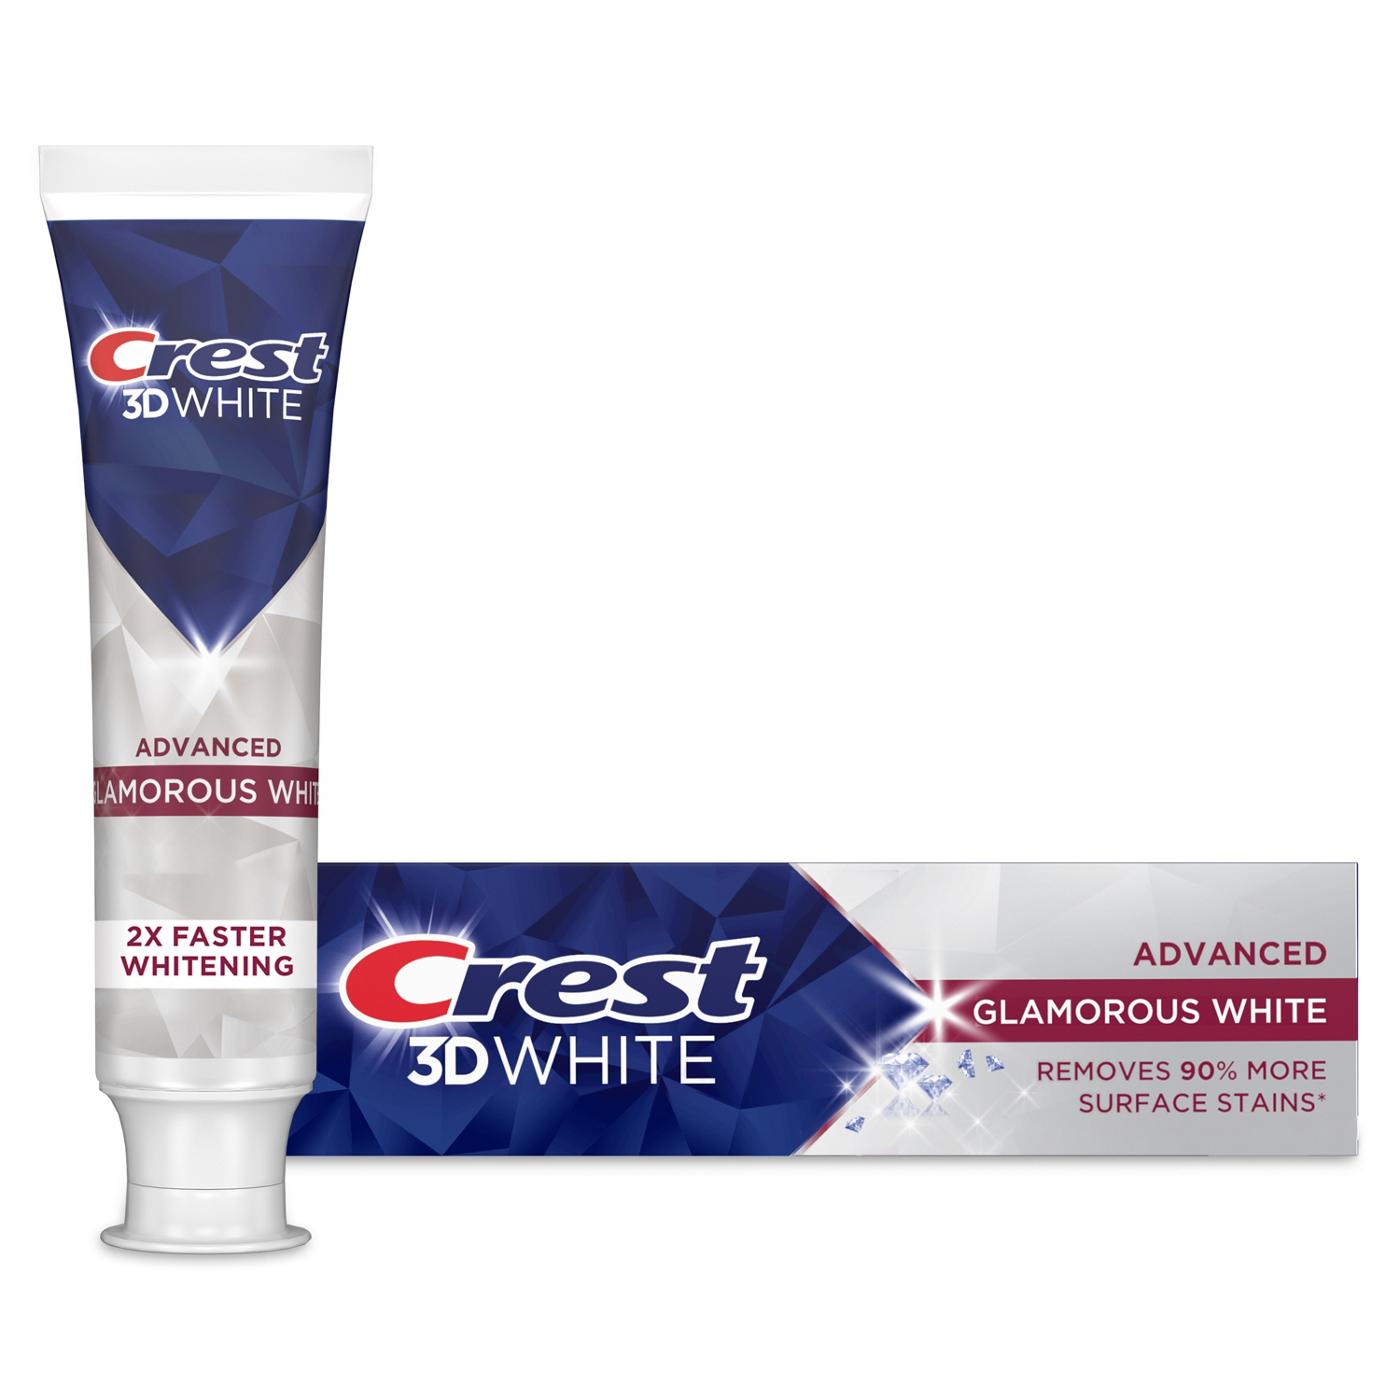 Crest 3D White Whitening Toothpaste - Glamorous White; image 7 of 8